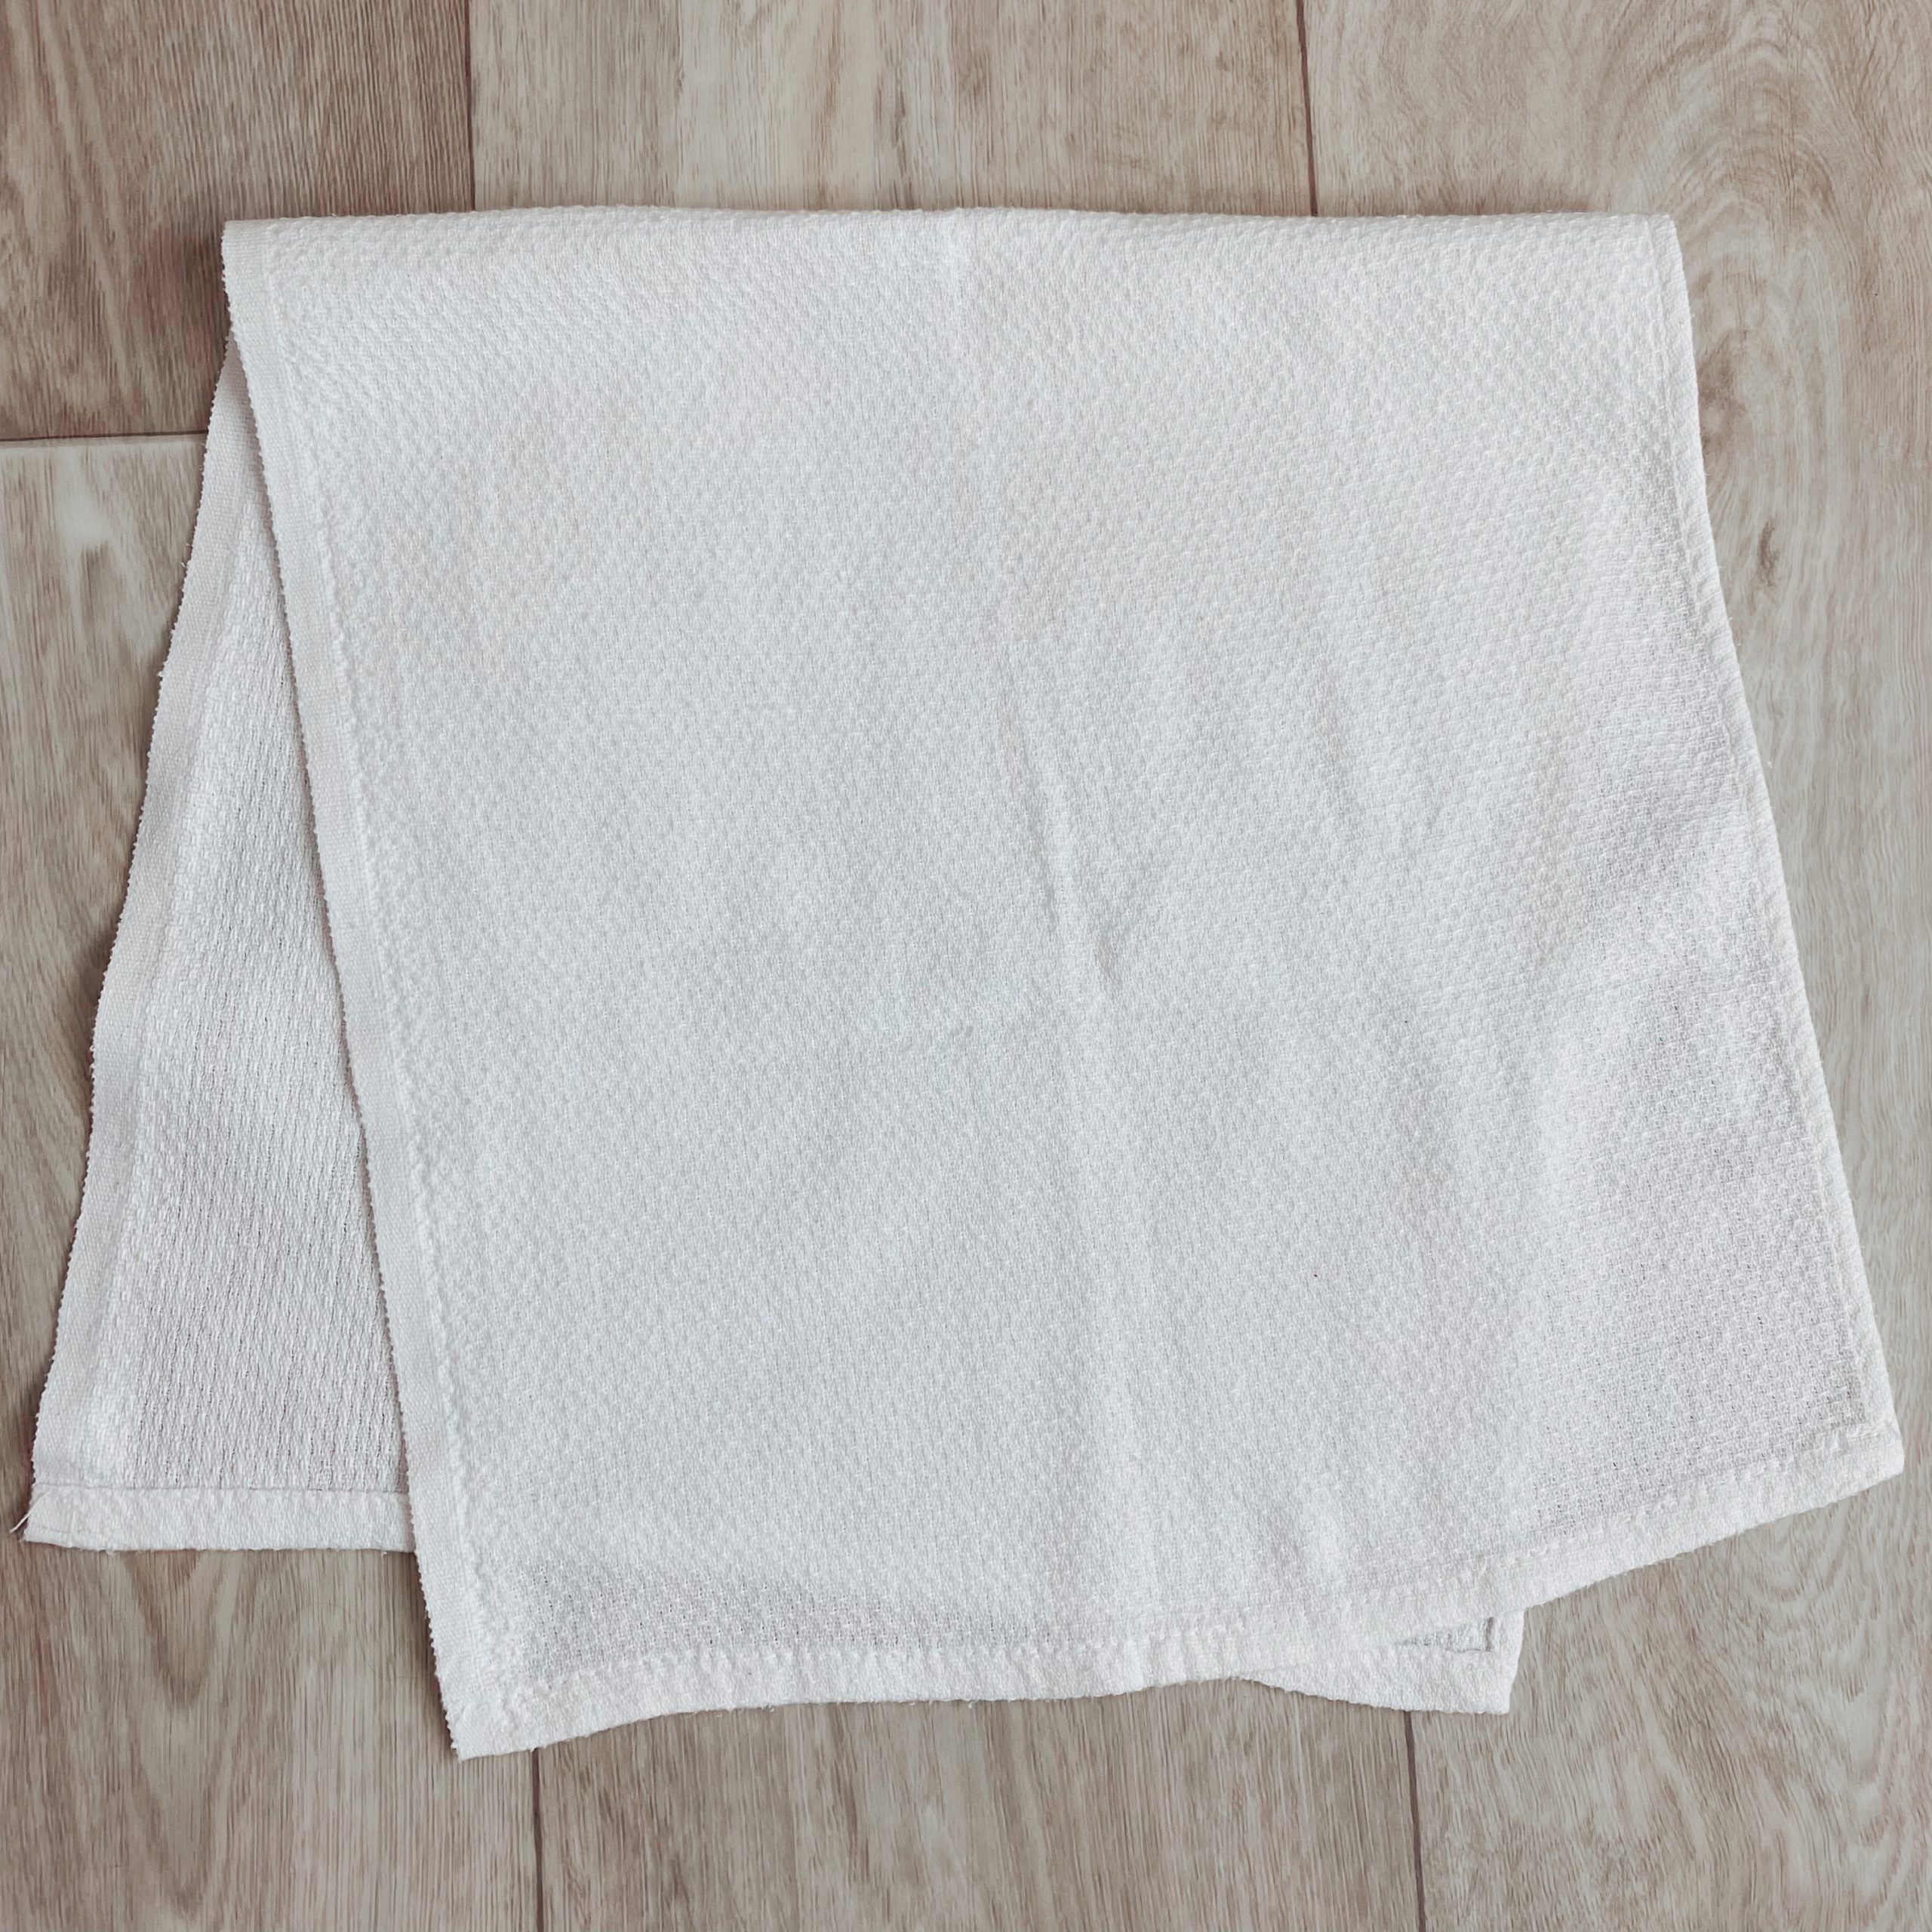 https://cottoncreations.com/content/uploads/2021/02/Craft-Huck-towel-7-scaled.jpg